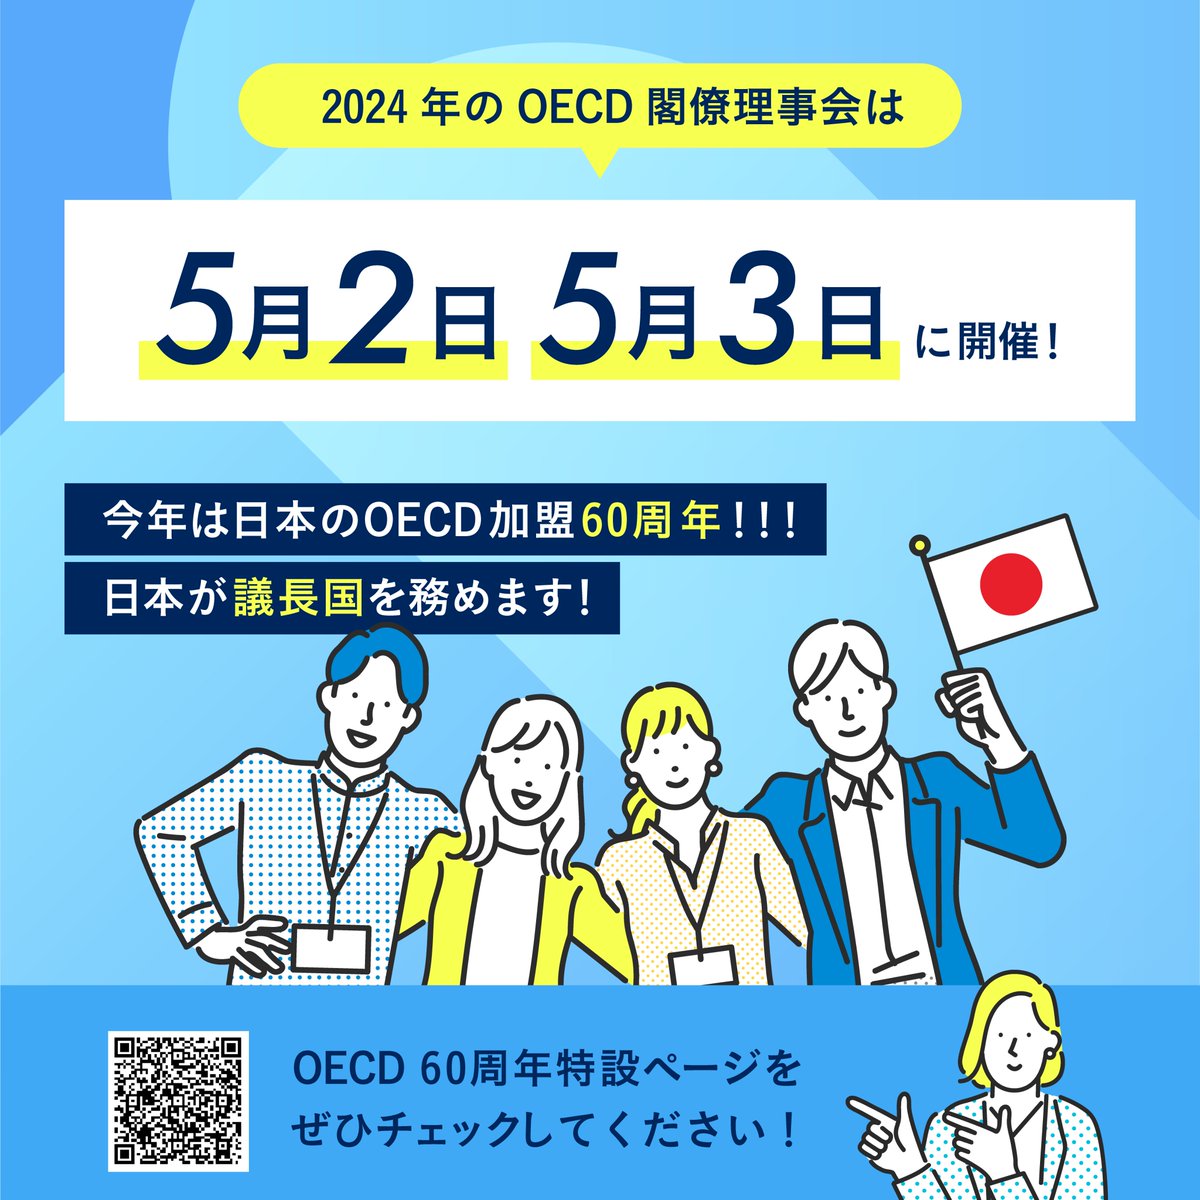 ／ 「#OECD 」ってなに？ ＼ 2024年は日本がOECDに加盟して60周年の記念すべき年！ 5月2日と3日に開催されるOECD閣僚理事会に向けて、OECDに関する豆知識をお伝えします！！ ▼「OECD加盟60周年」特設ページはこちらから mofa.go.jp/mofaj/ecm/oecd… #外務省 #MOFA